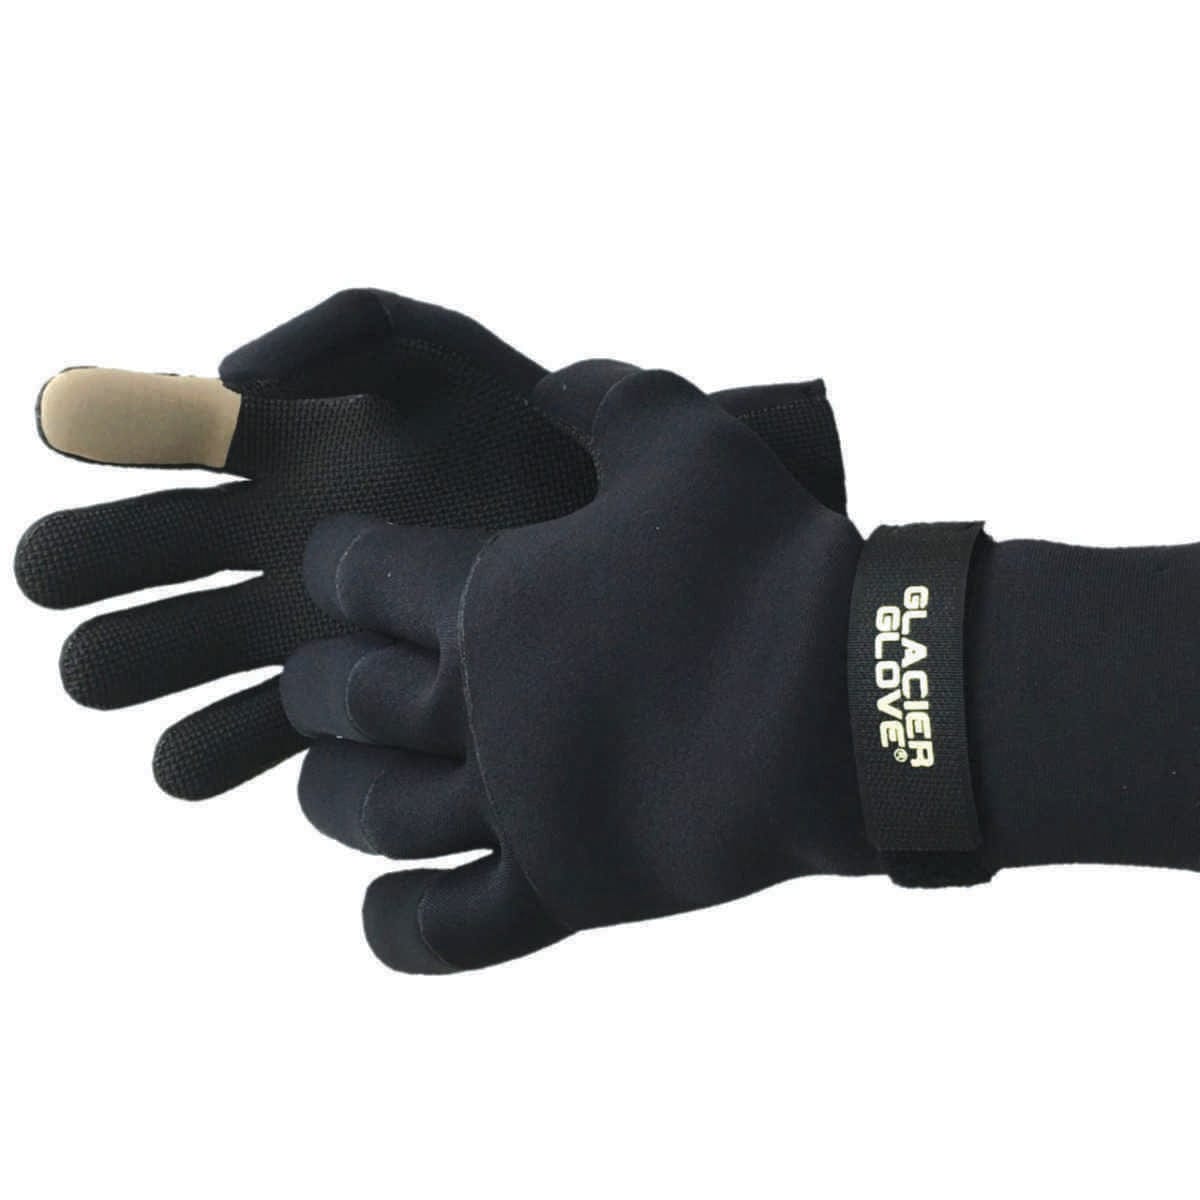 Bristol Bay Neoprene Gloves